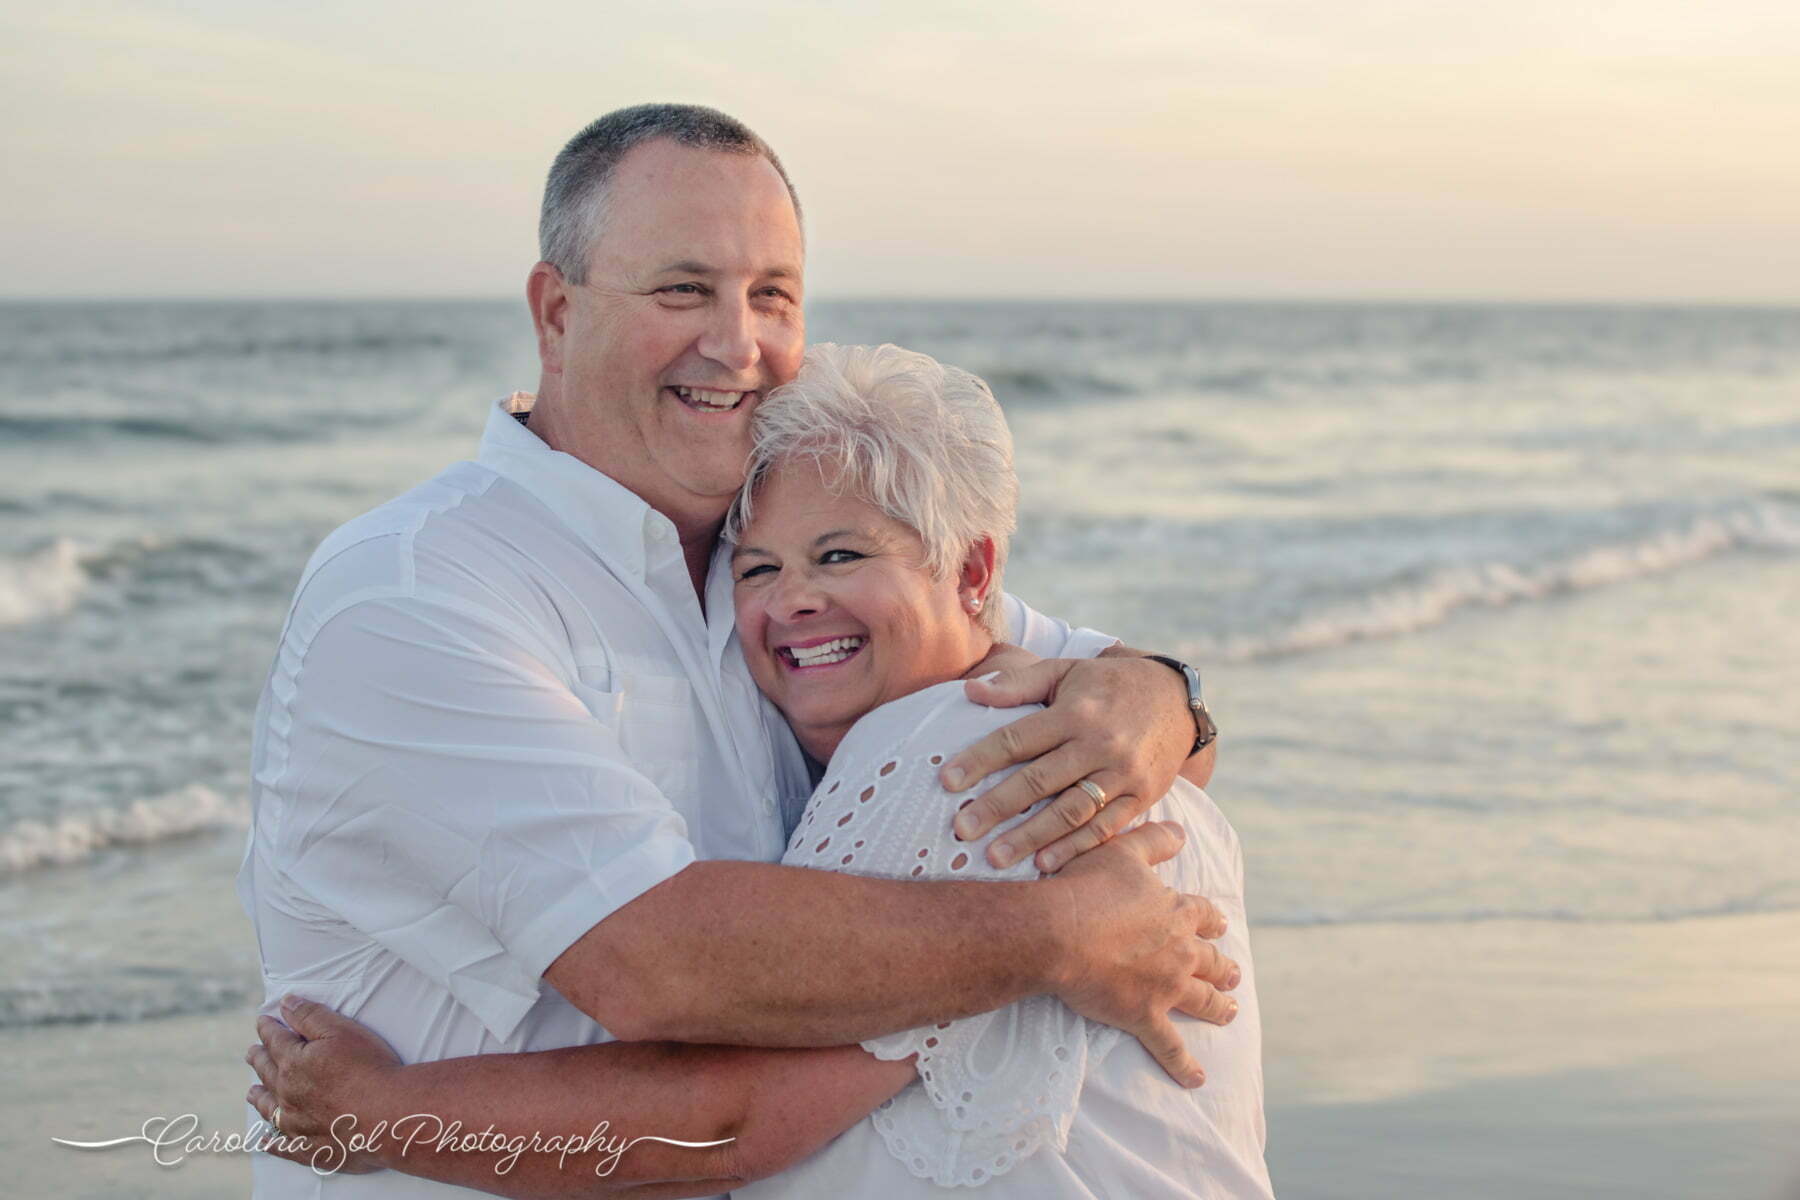 Couple beach portraits embracing lovingly during Sunset Beach photoshoot.